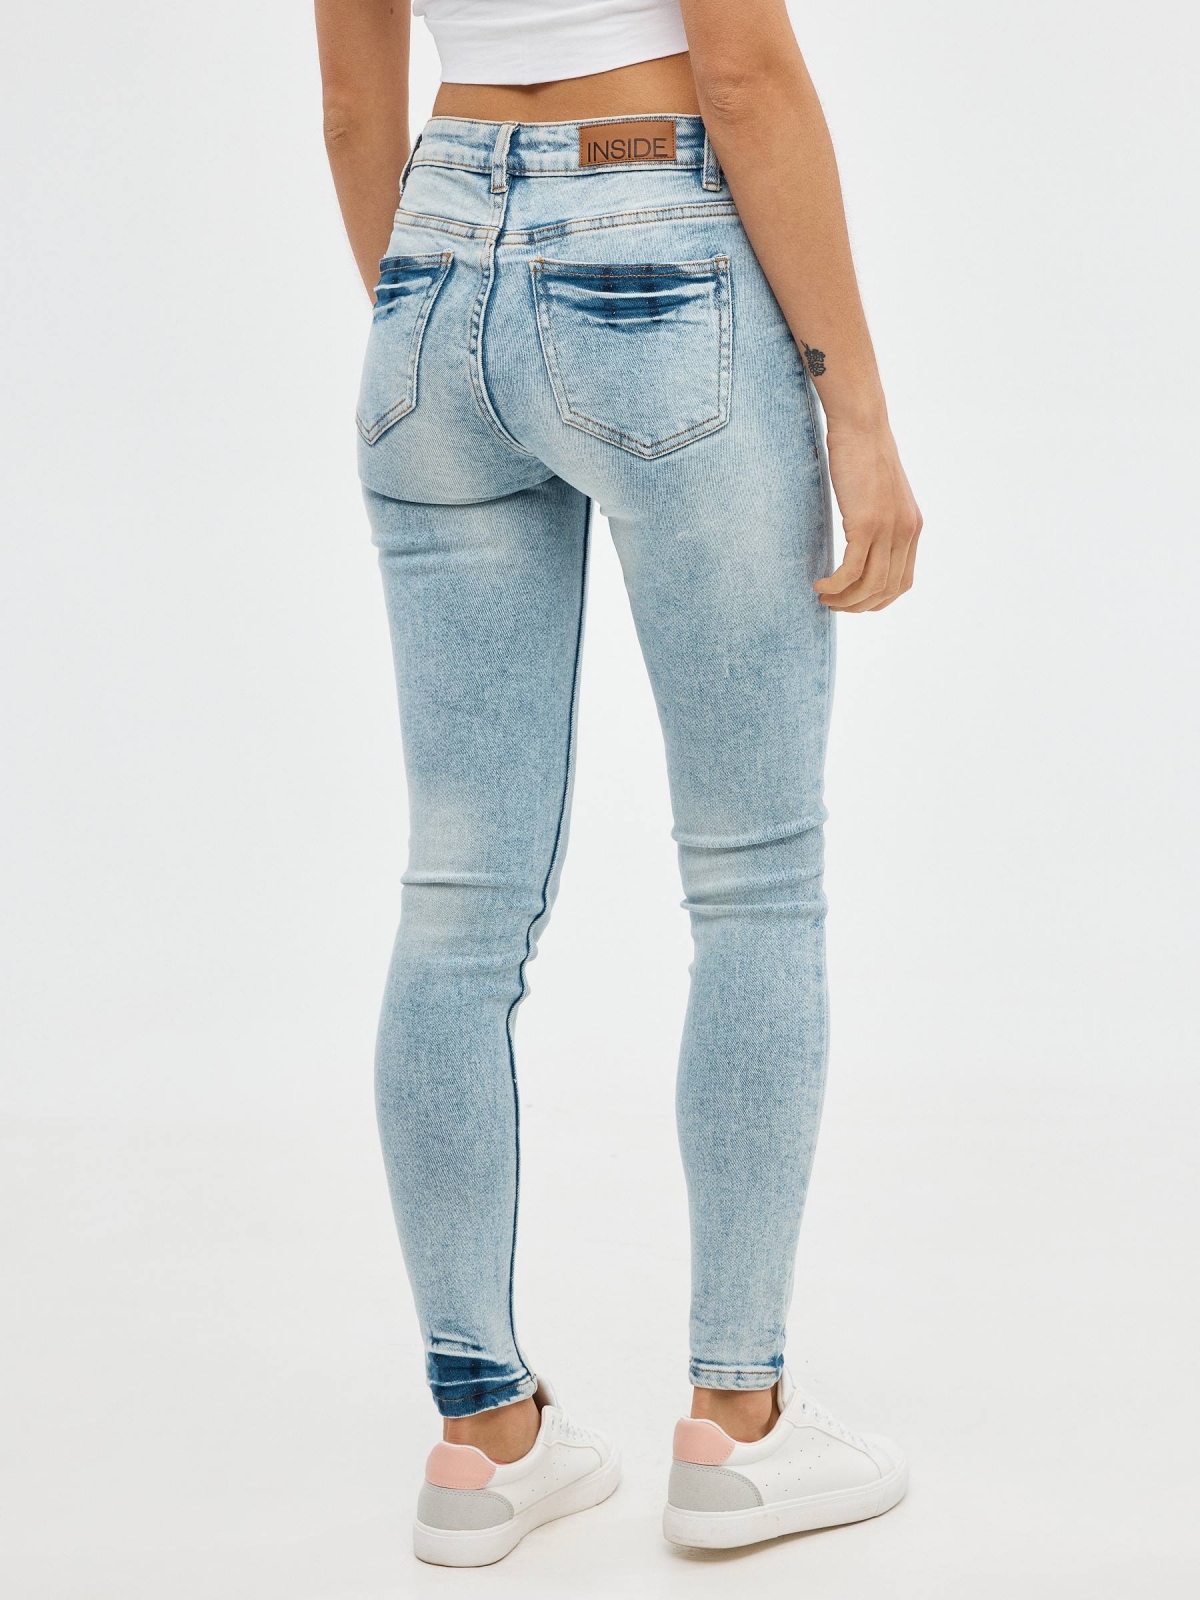 Jeans Skinny denim claro azul vista media trasera